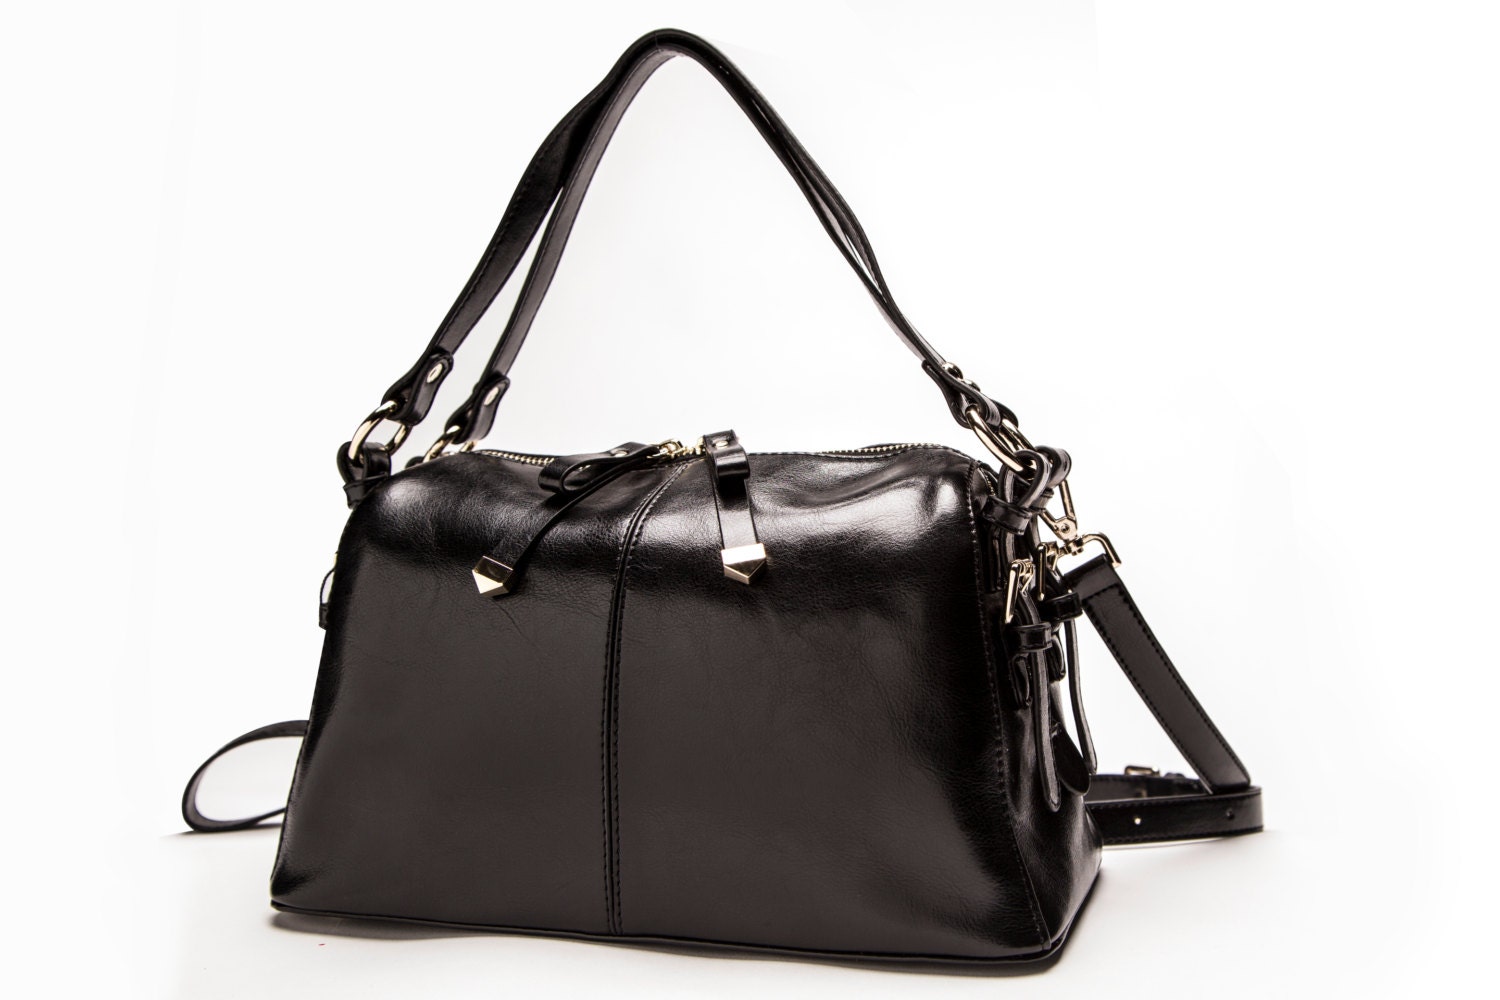 Clearance Genuine Leather Handbag. Black Nappa Leather